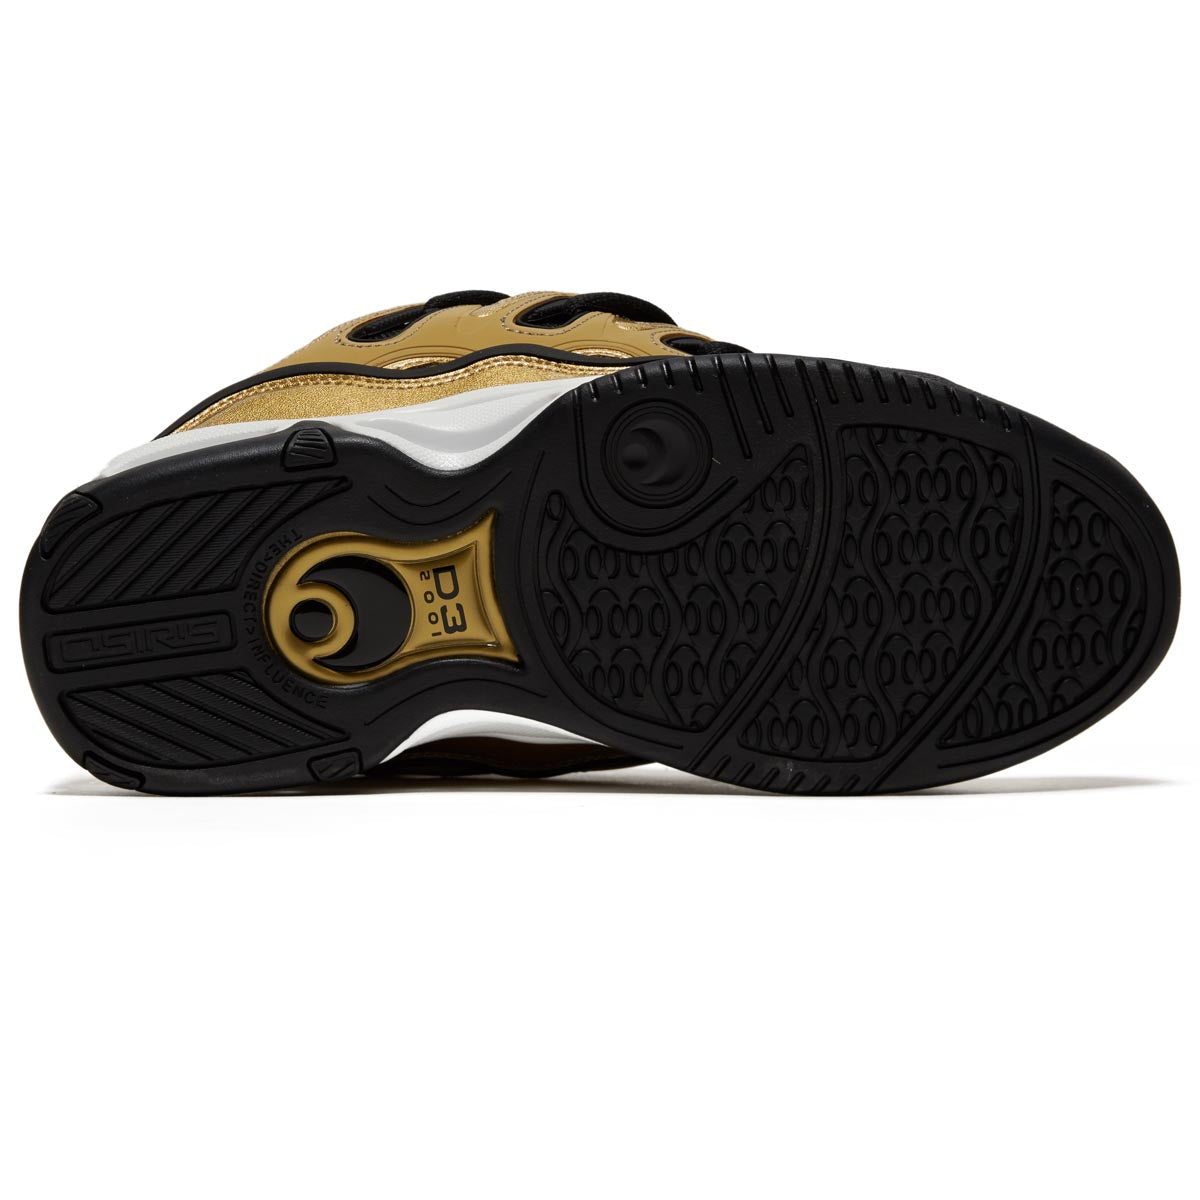 Osiris D3 2001 Shoes - Gold/Black/White image 4